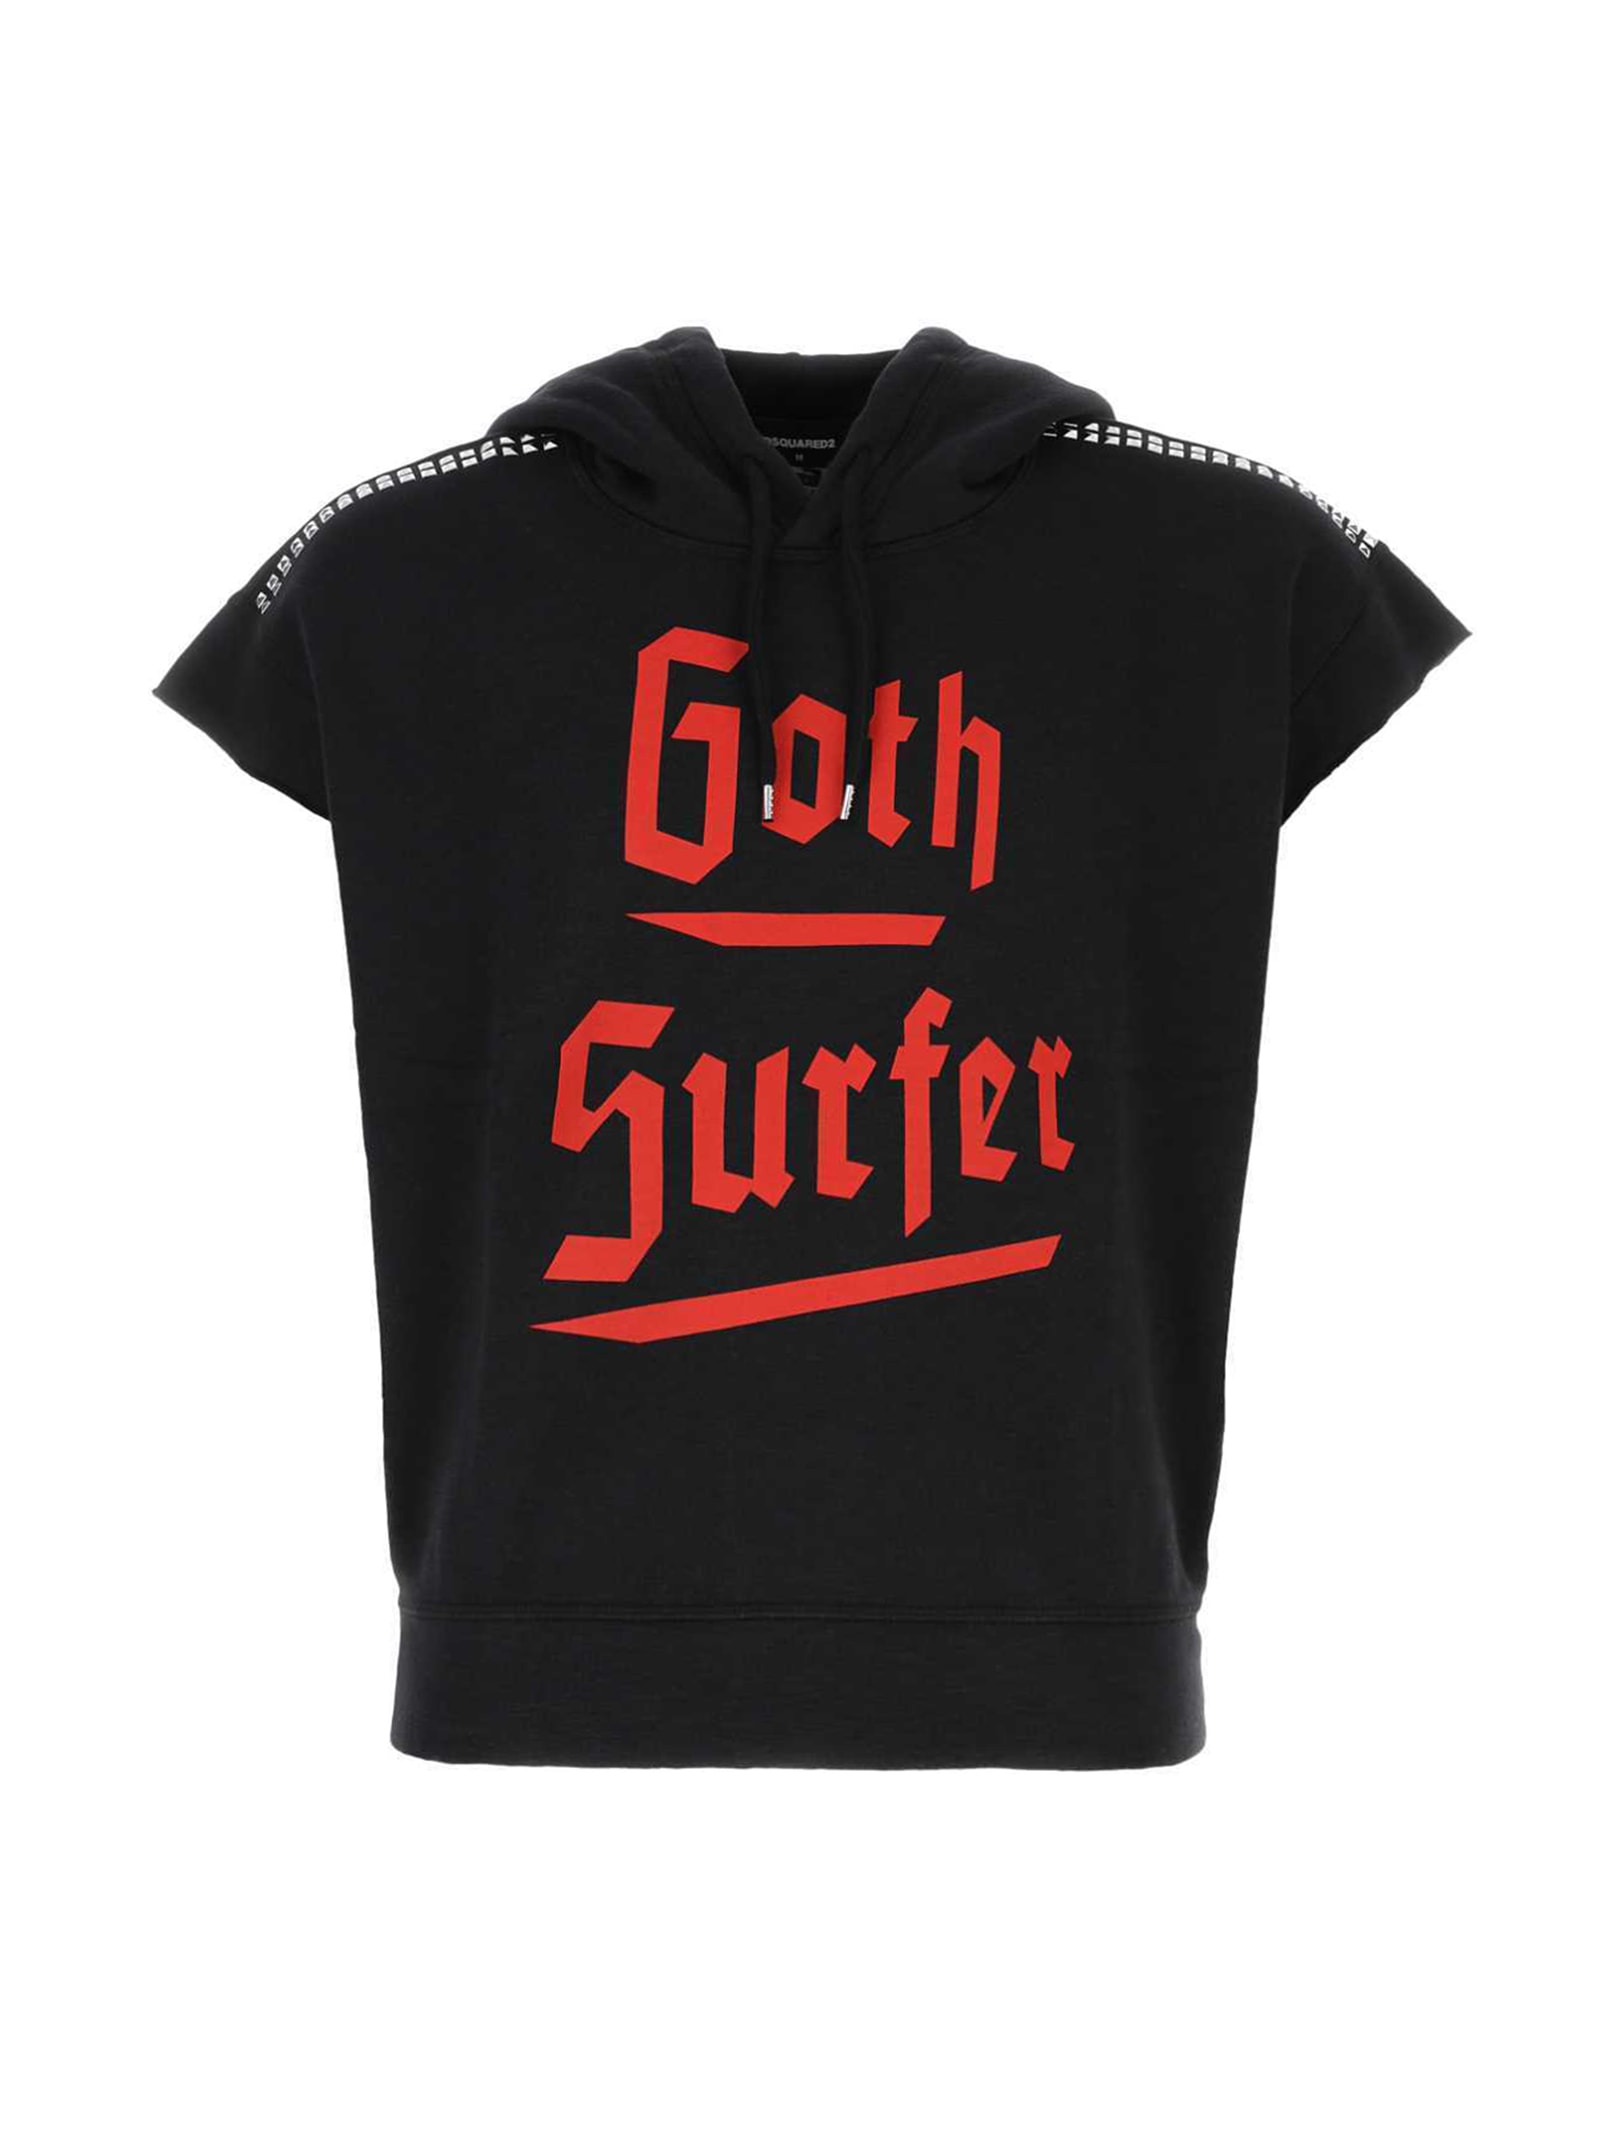 Dsquared2 Goth Surfer short-sleeve T-shirt - Farfetch